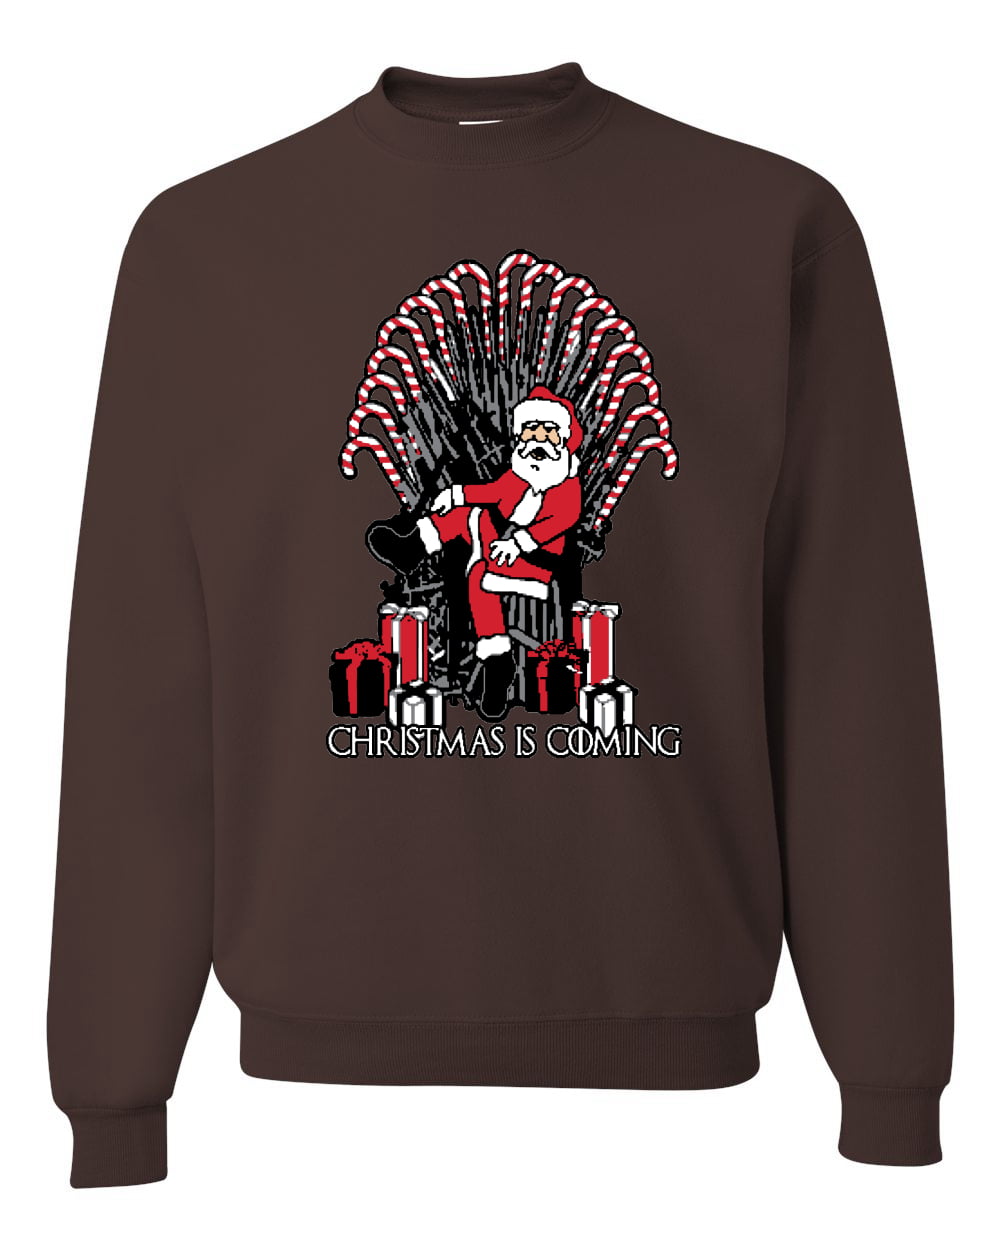 Mens Deliver All Night Long Santa Christmas Sweater Funny Ugly Christmas Sweatshirt